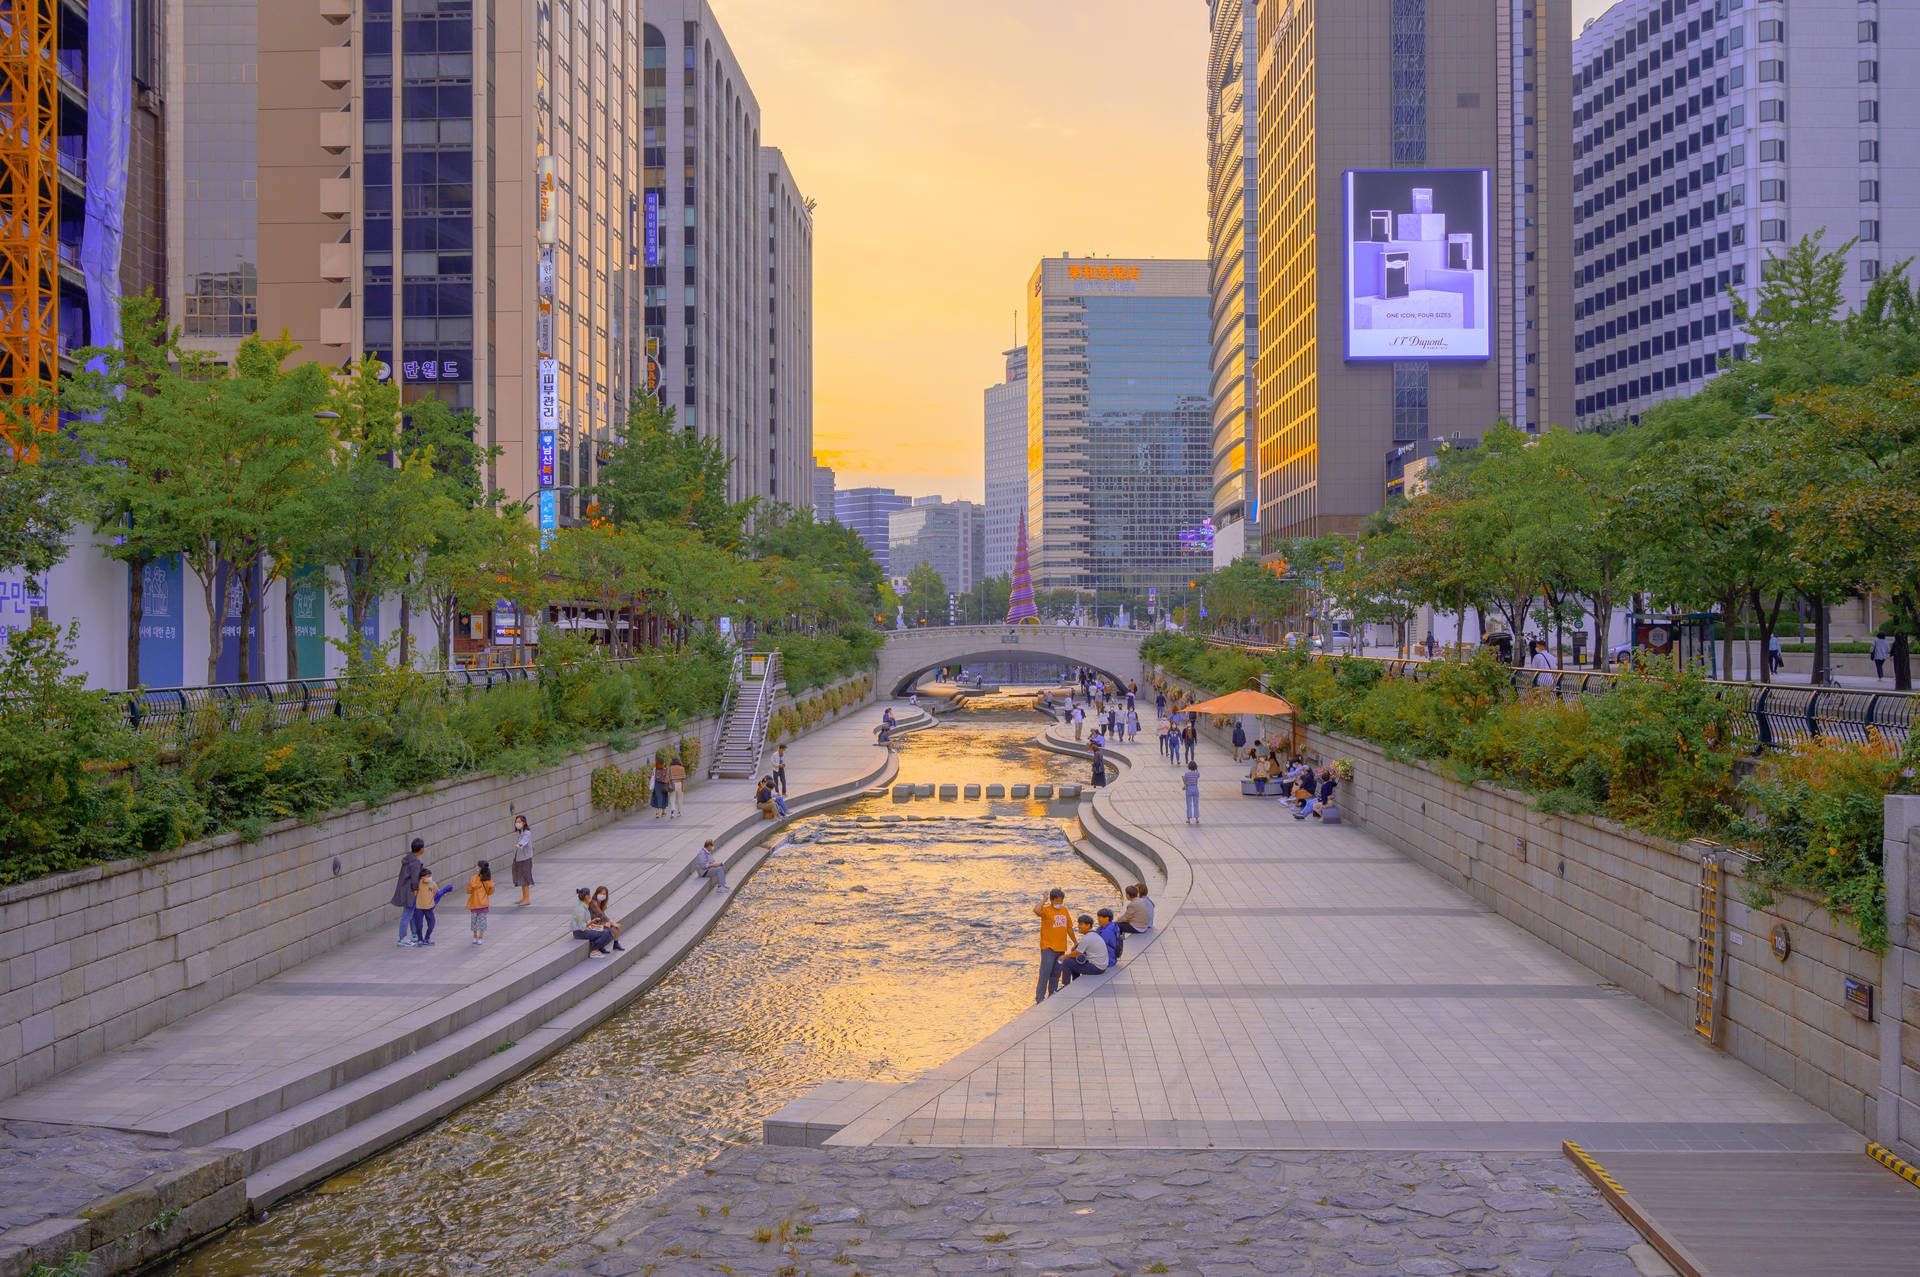 Seoul Cheonggyecheon Stream Background